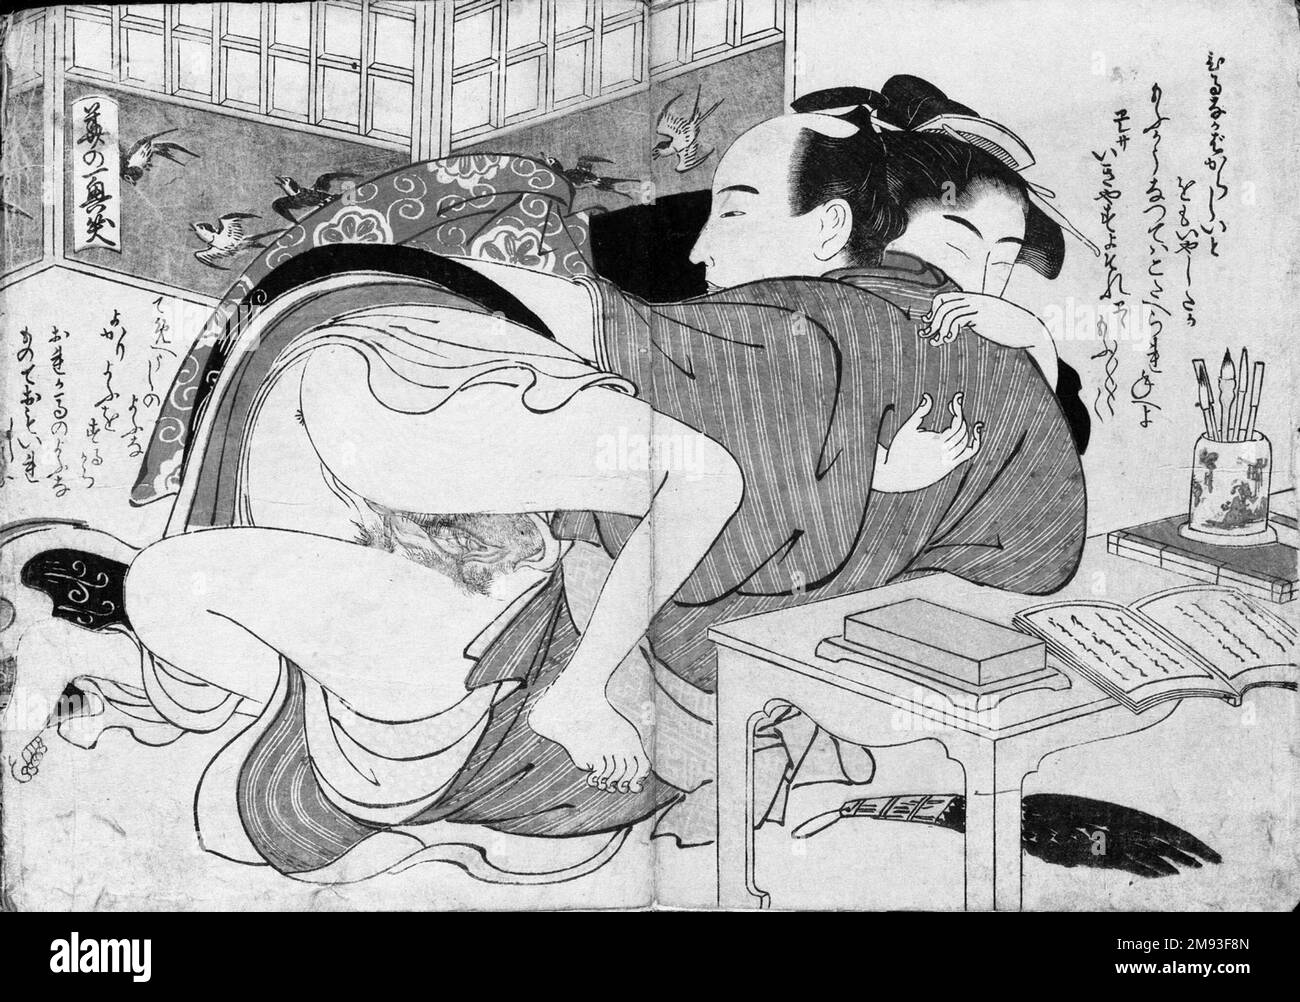 Shunga Album (Woodblock Print) Kitagawa Utamaro (Japanese, 1753-1806). Shunga Album (Woodblock Print), 18th-19th century. Ink and color on paper, 8 3/4 x 12 1/2 in. (22.2 x 31.8 cm).   Asian Art 18th-19th century Stock Photo